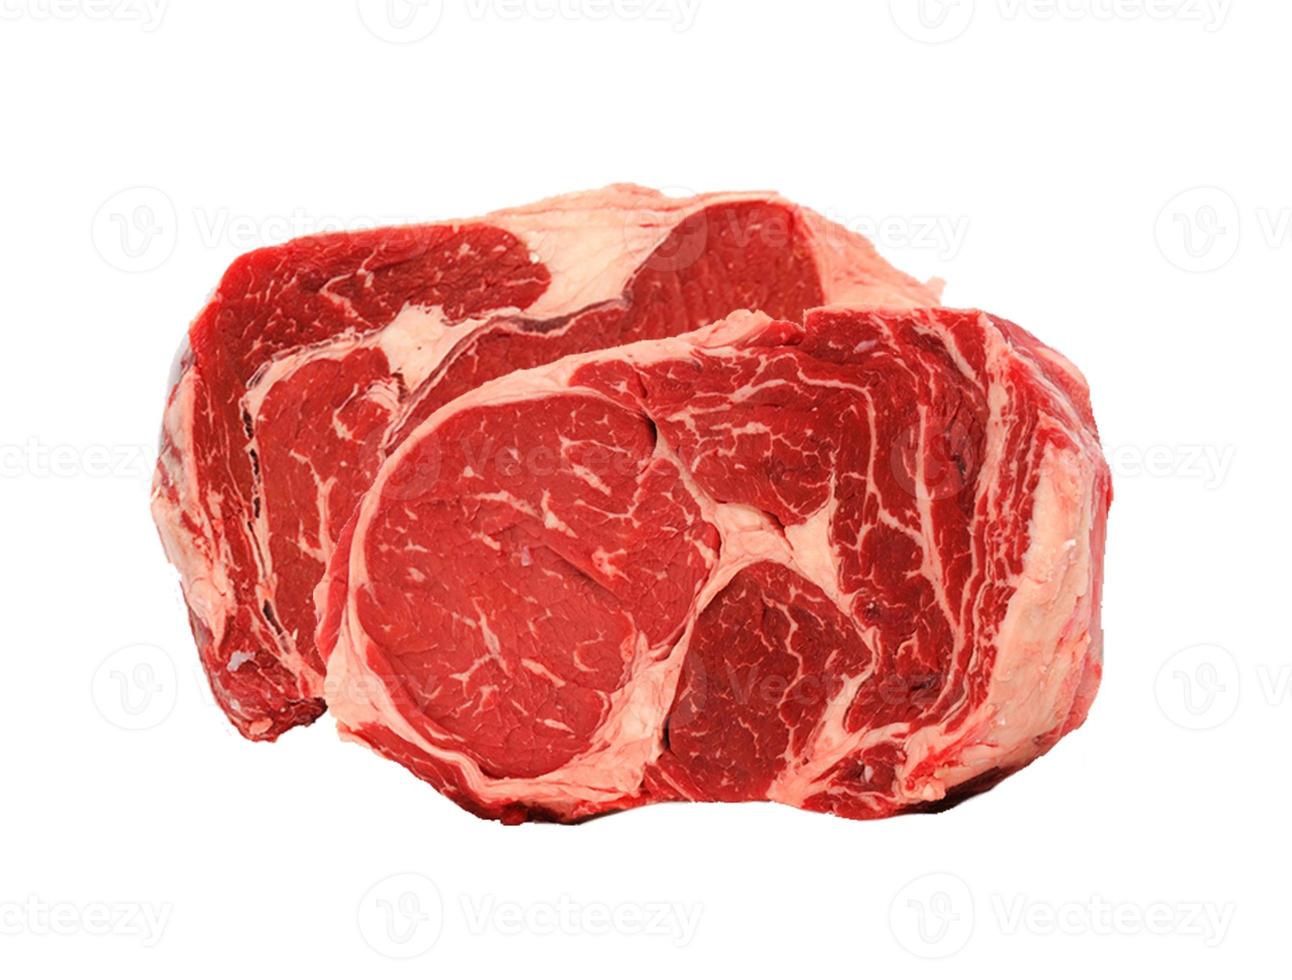 carne cruda manzo gf rib eye, taglio isolato su sfondo bianco foto